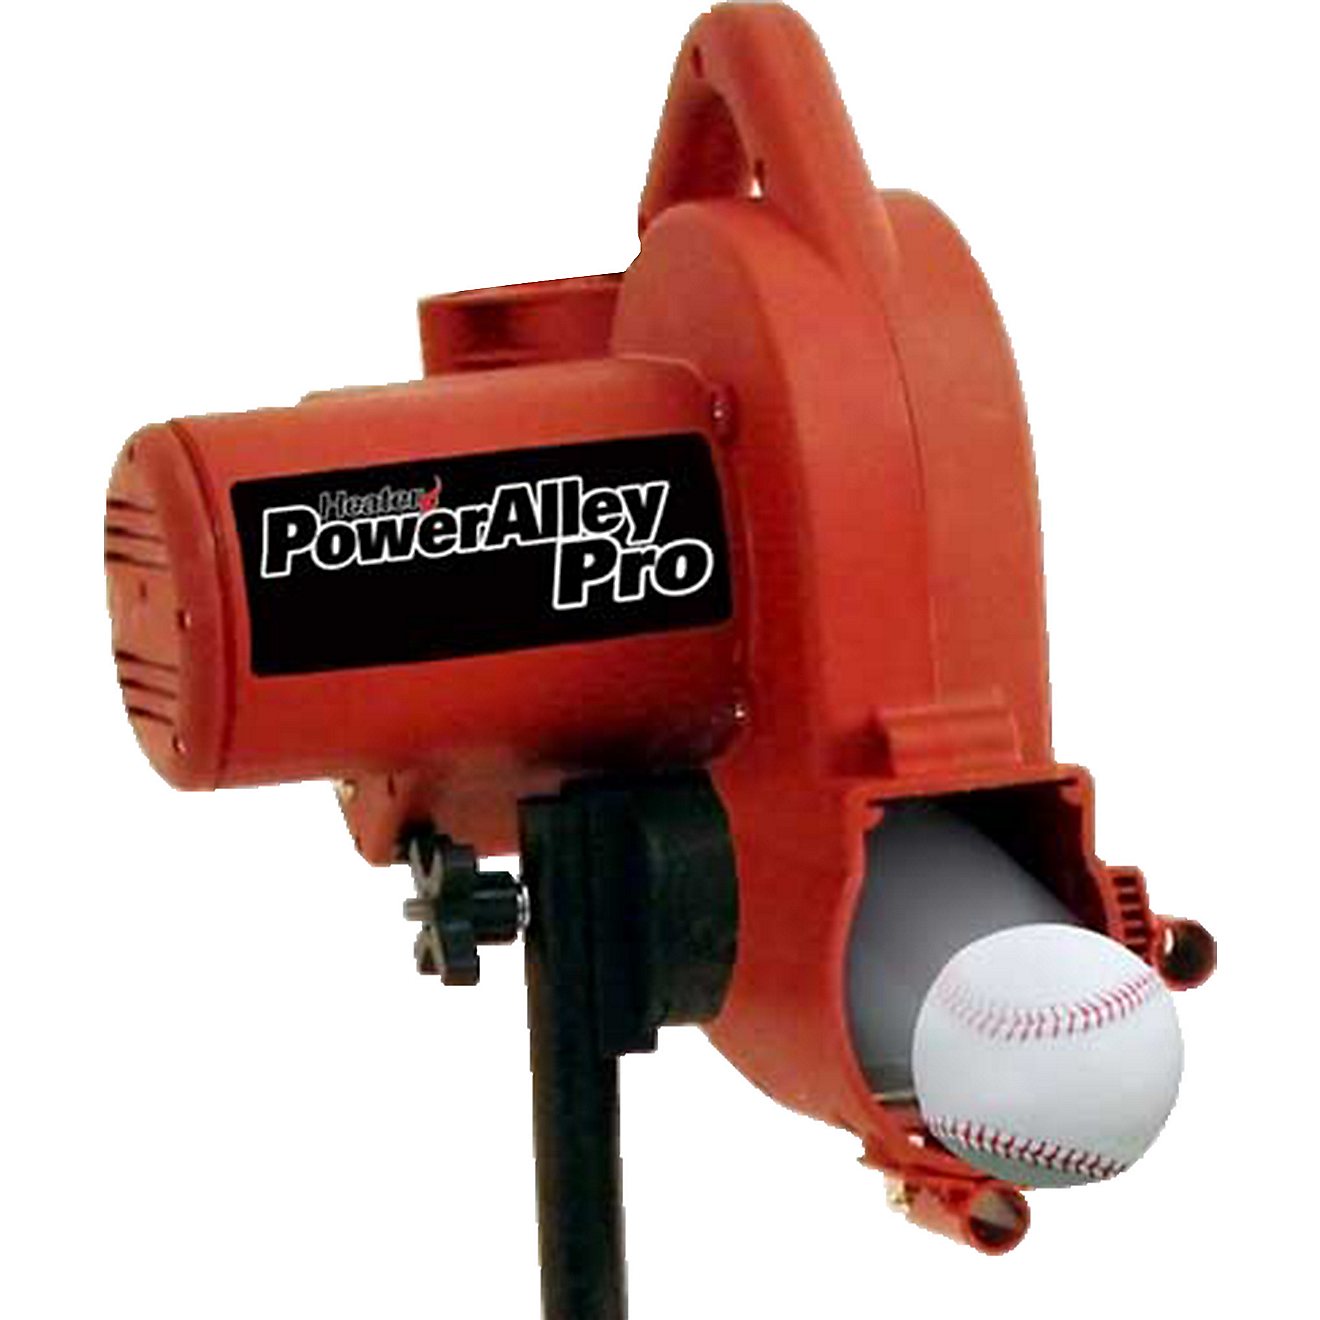 Heater Sports Power Alley Pro Real Baseball Machine 